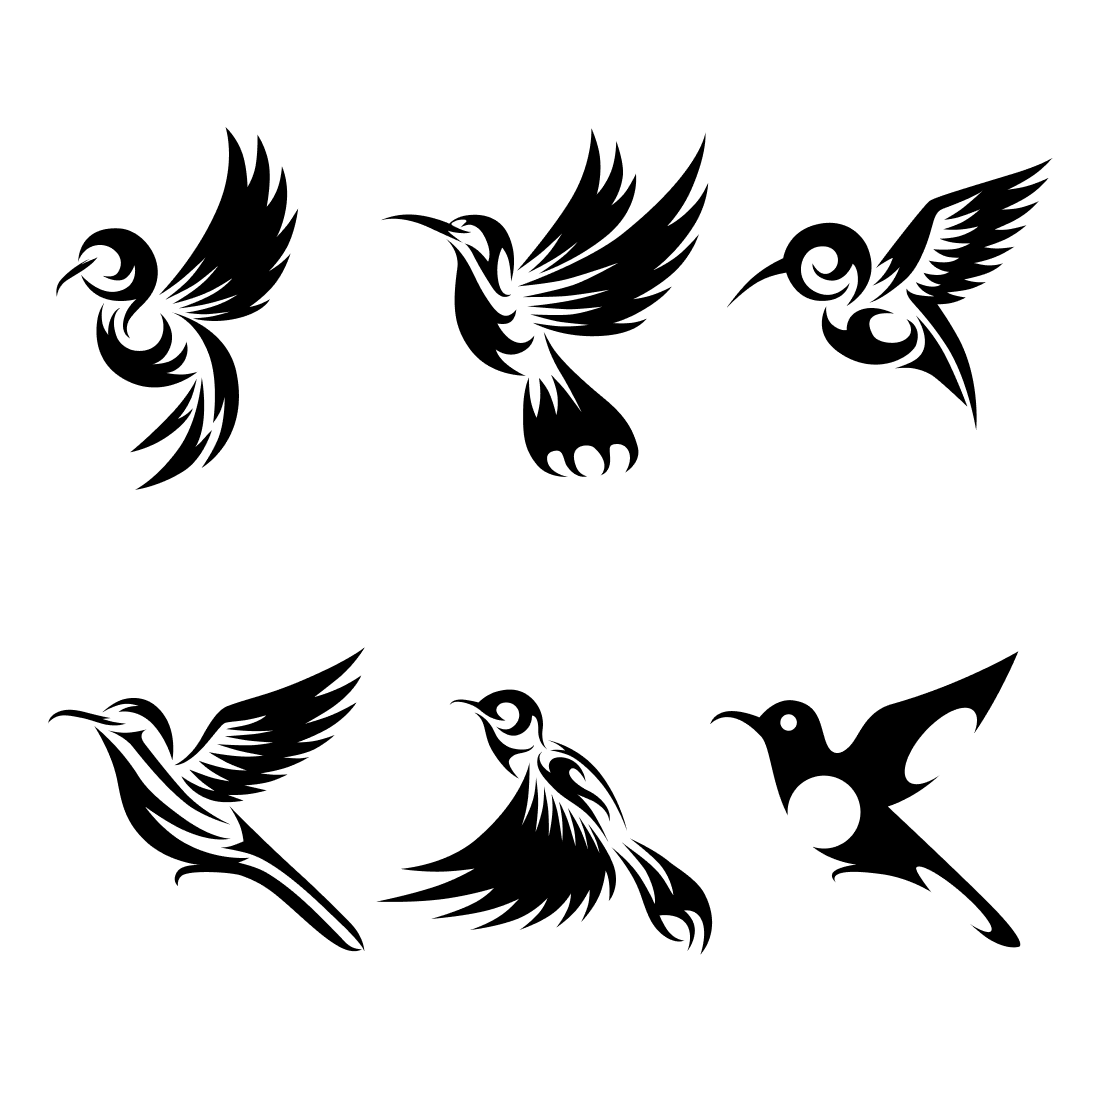 Set of black and white birds flying.